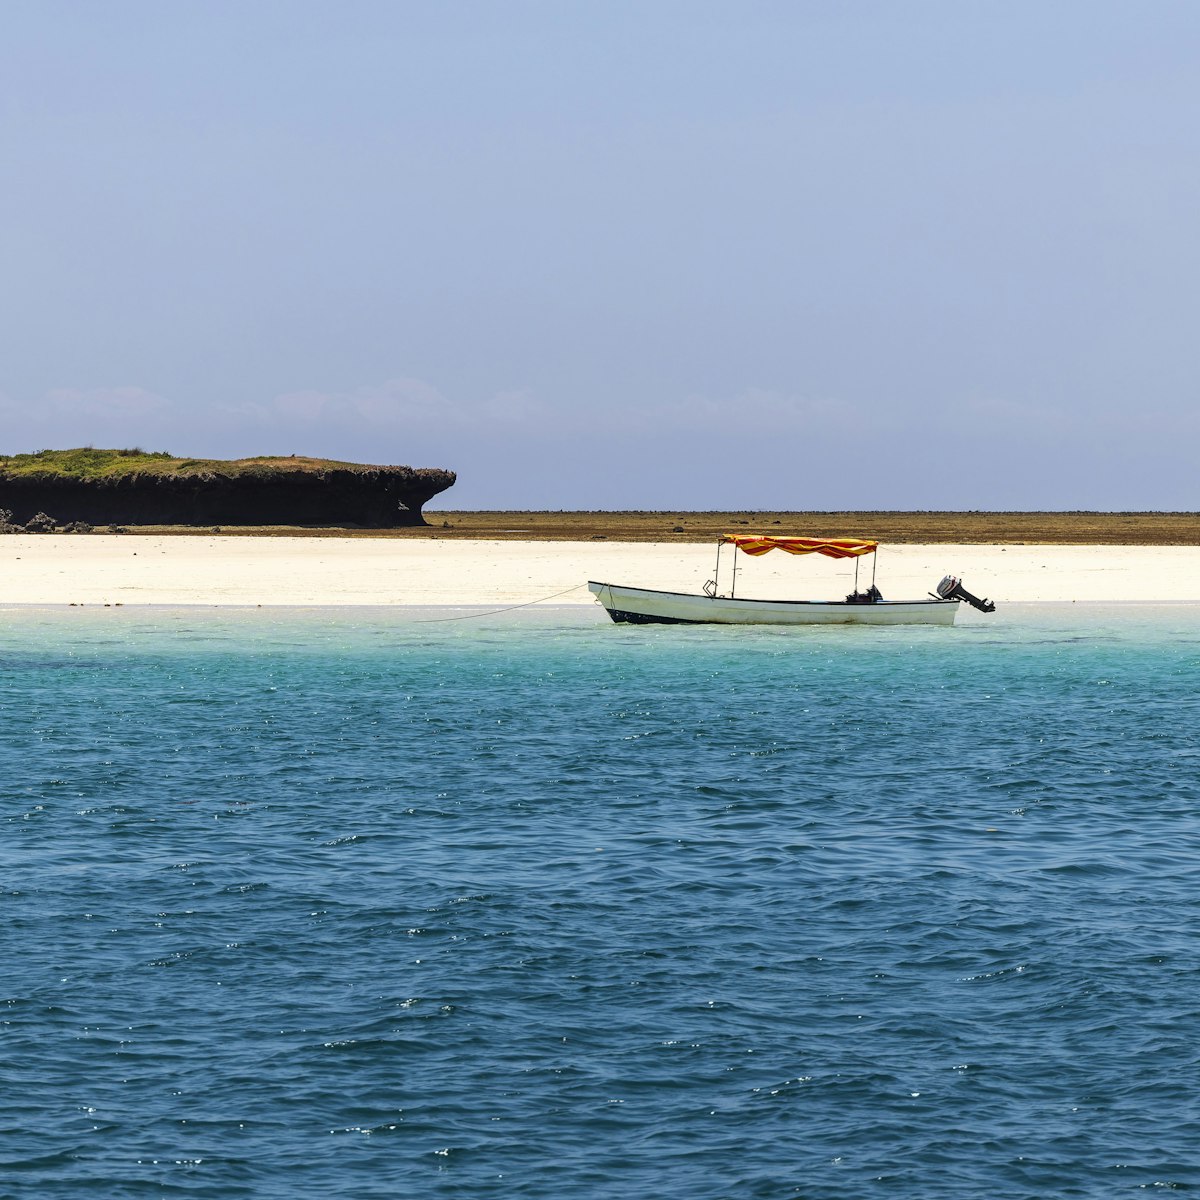 Wasini Island and Kisite-Mpunguti Marine National Park, Kenya.